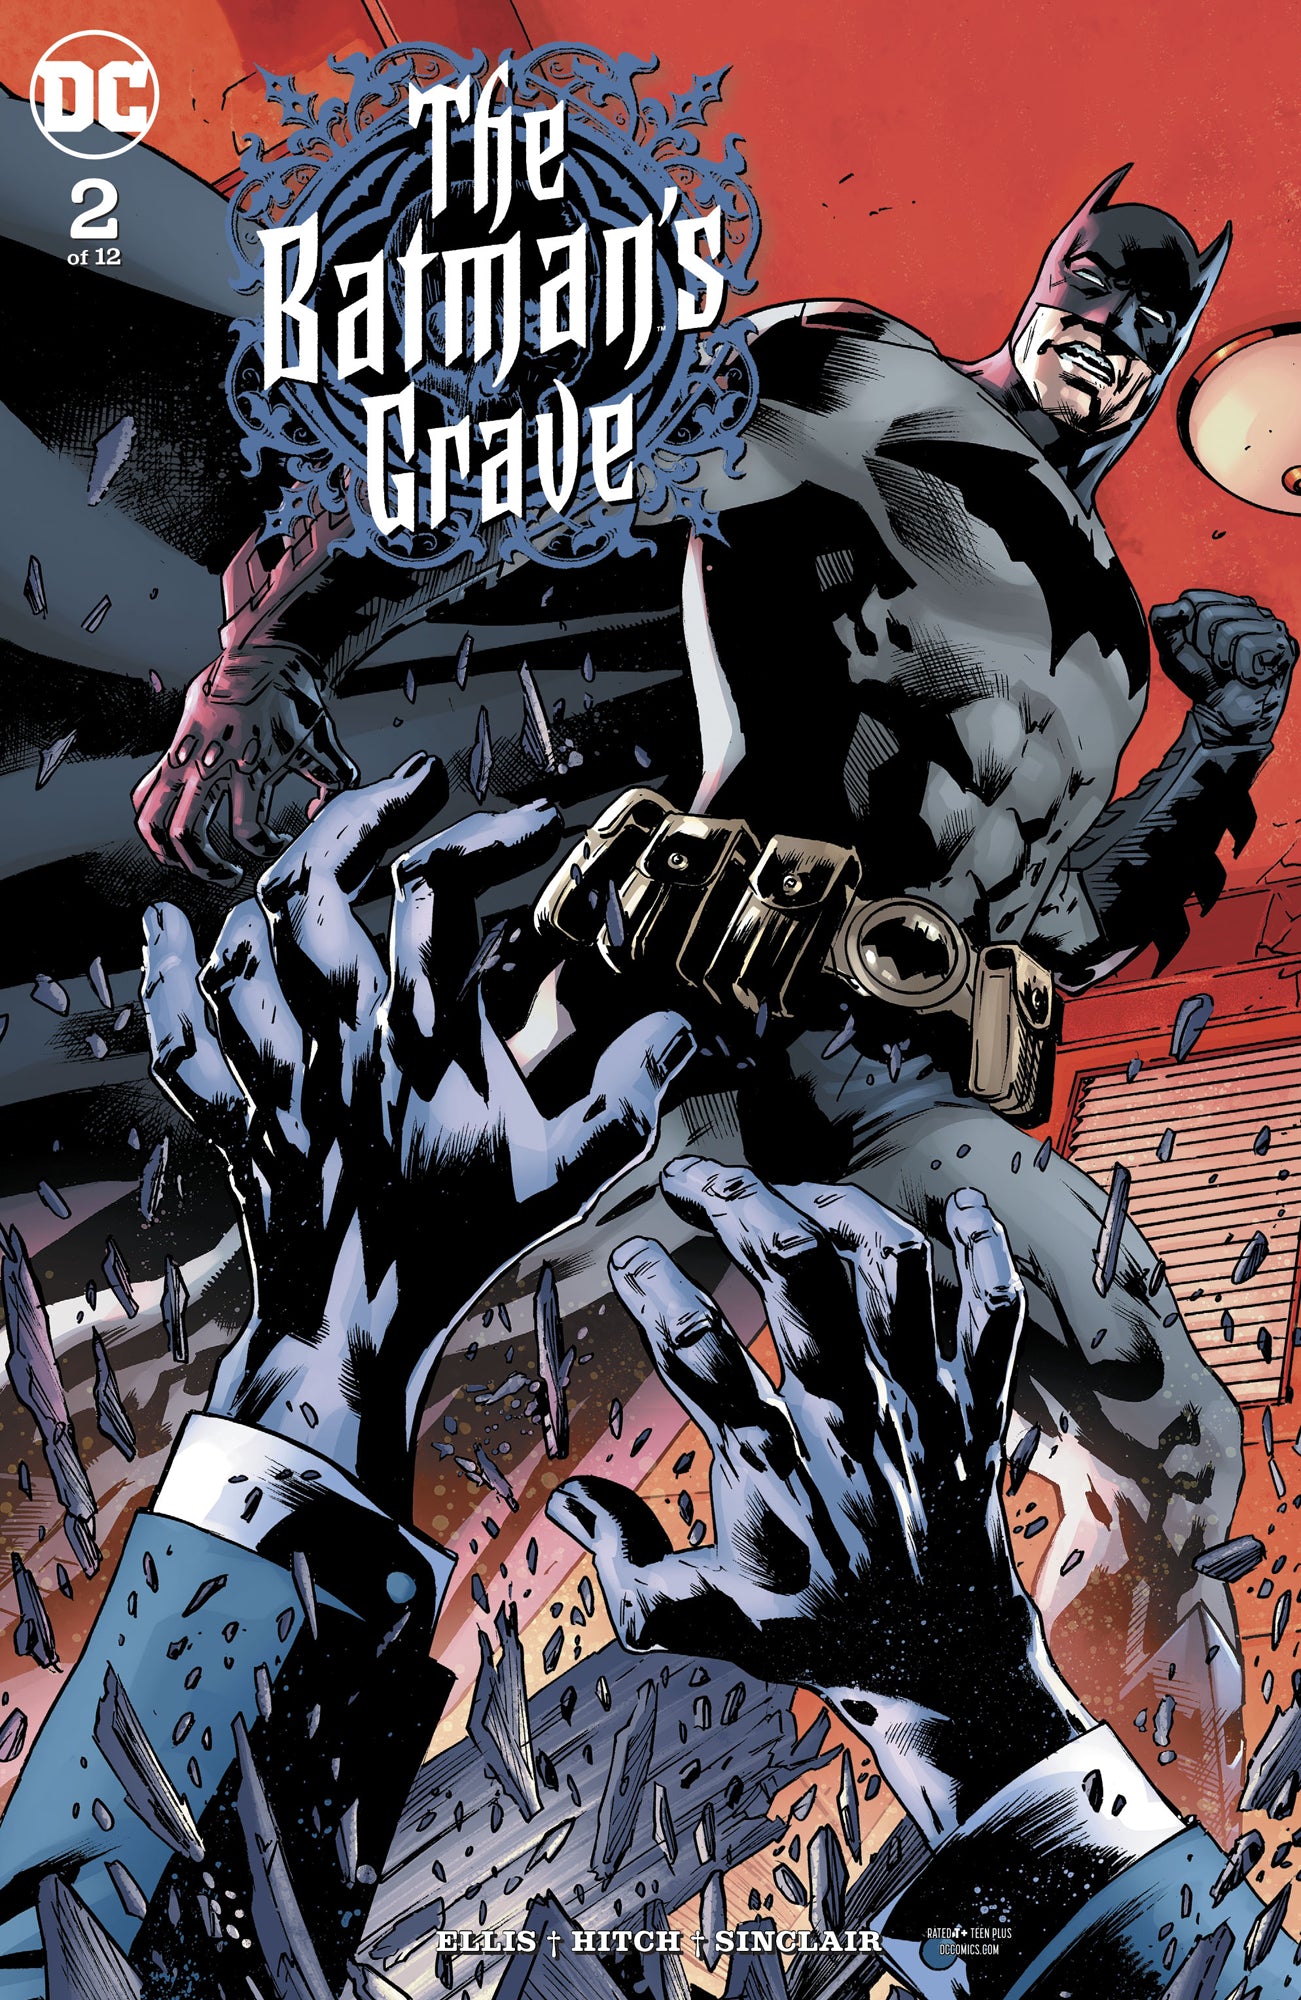 BATMANS GRAVE #2 (OF 12) | Game Master's Emporium (The New GME)